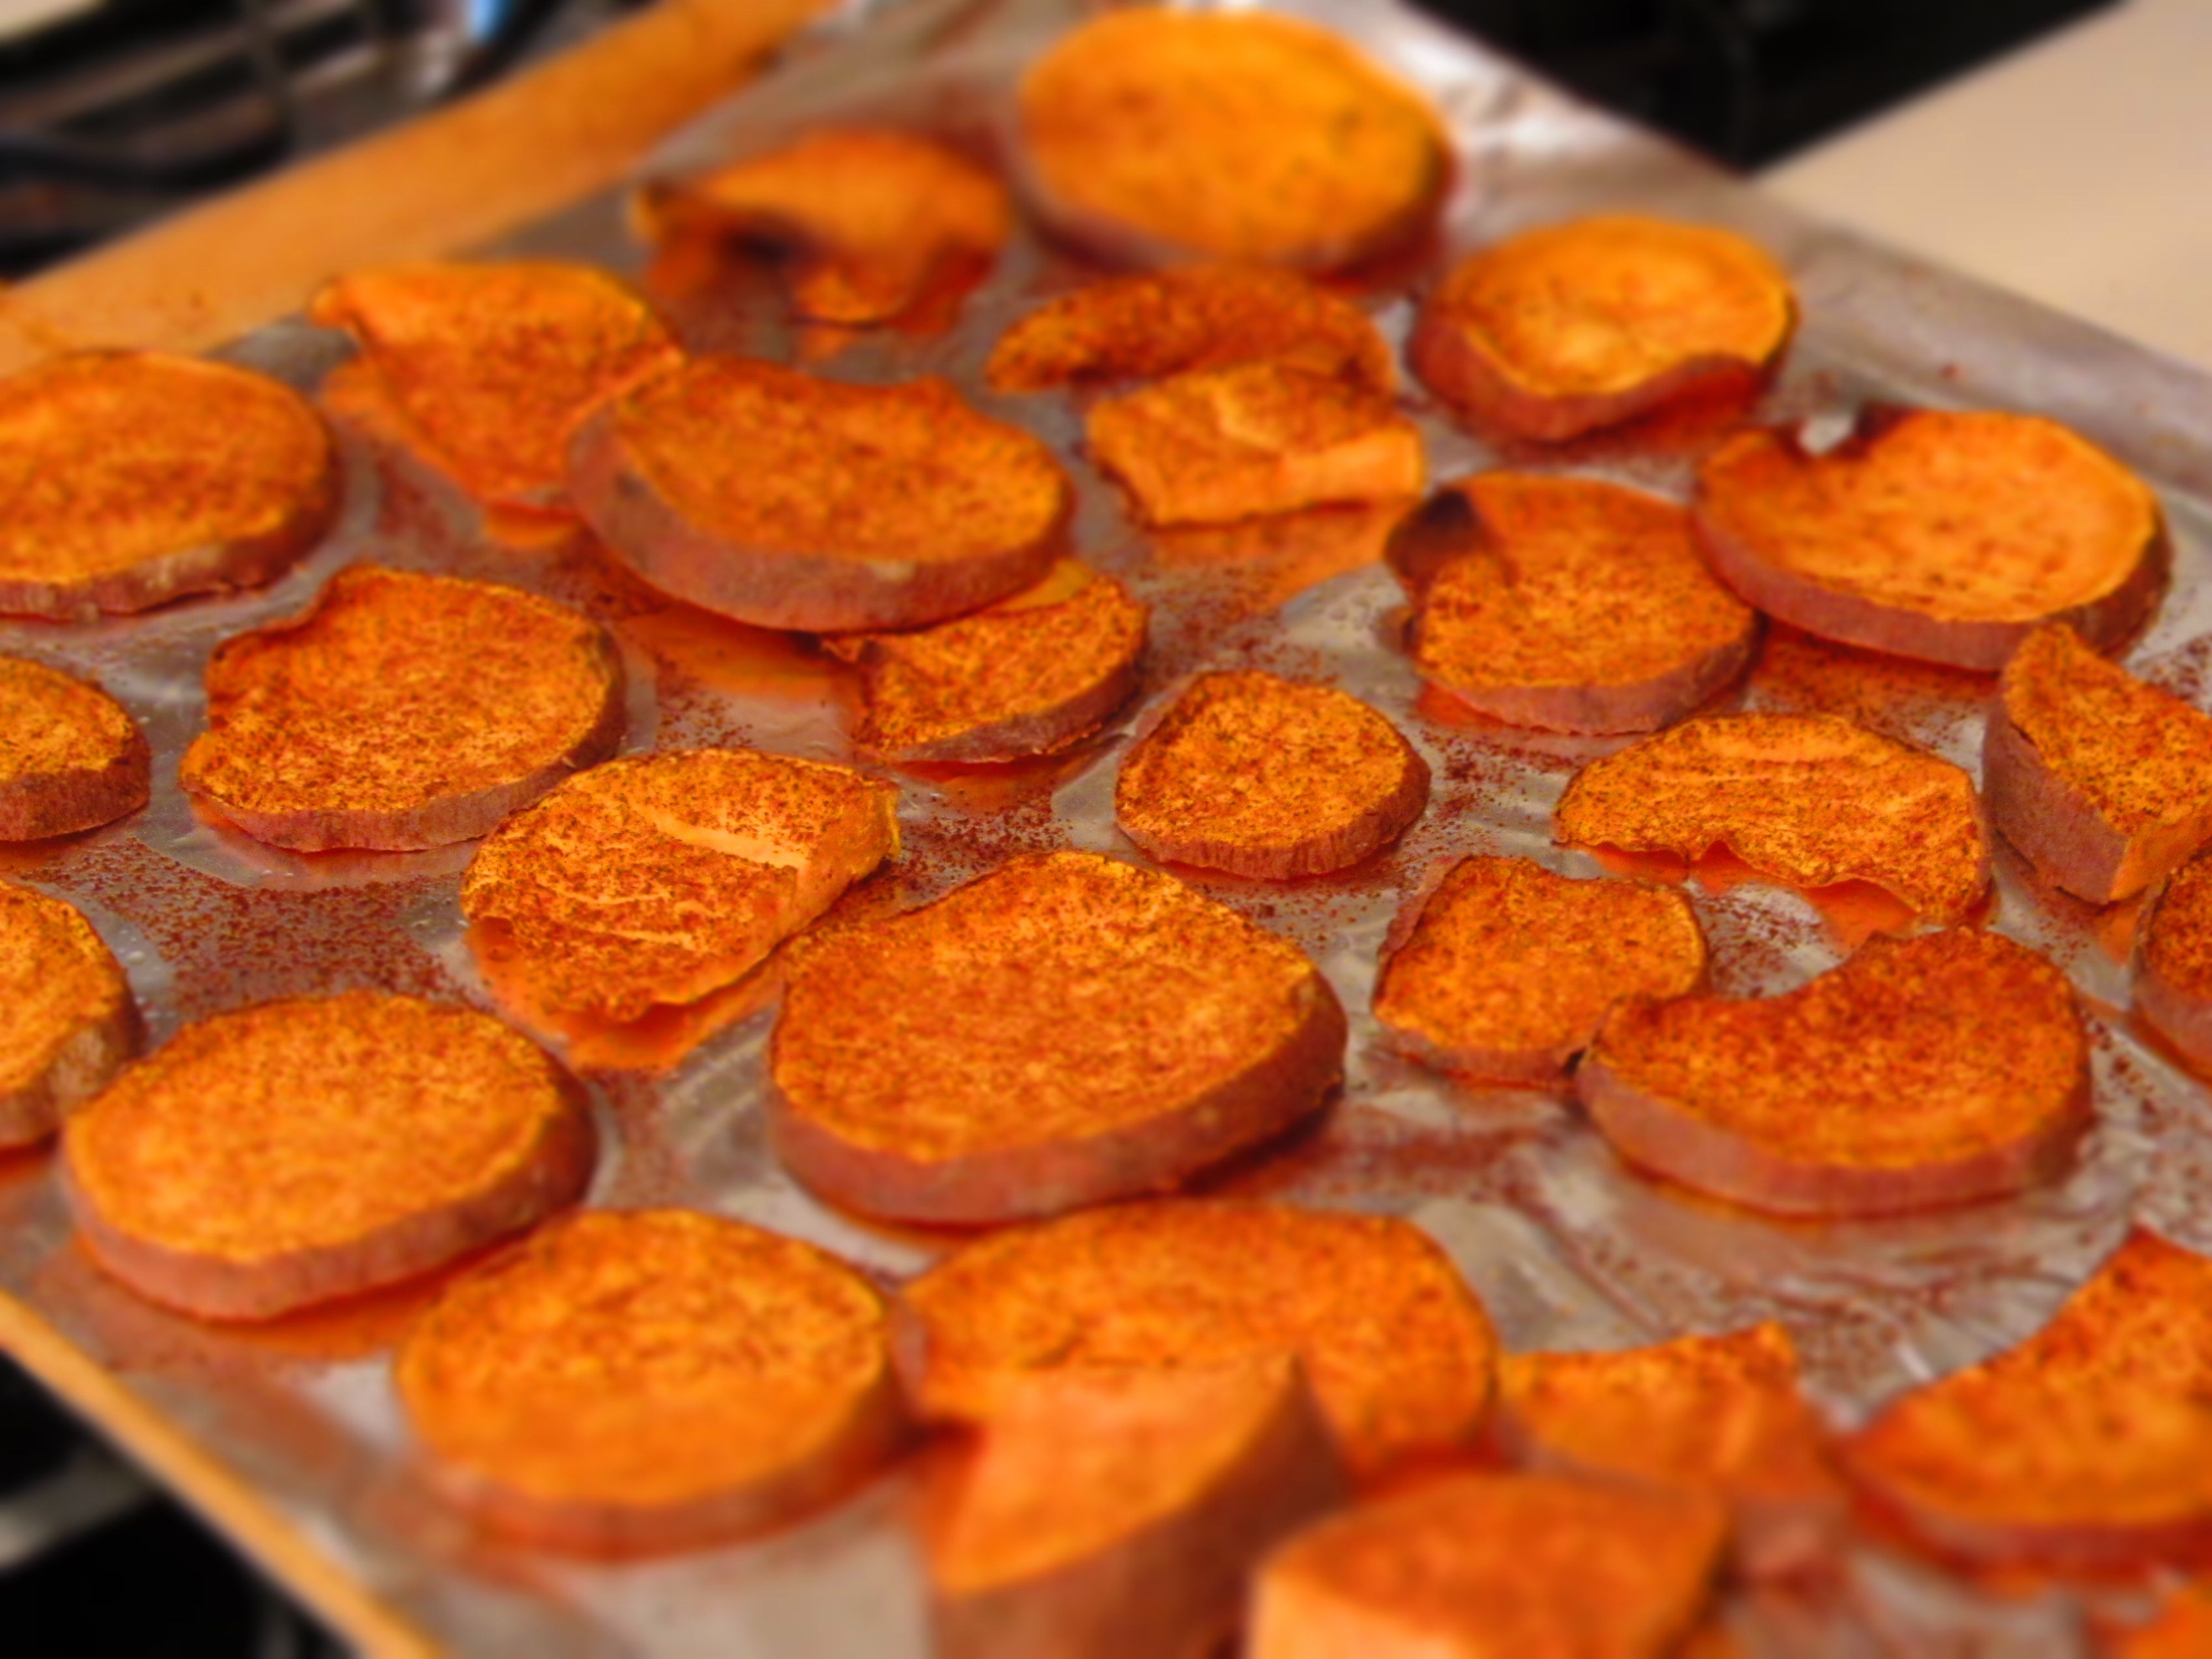 Baked sweet potato slices | Recipes | Pinterest | Baked sweet potato ...